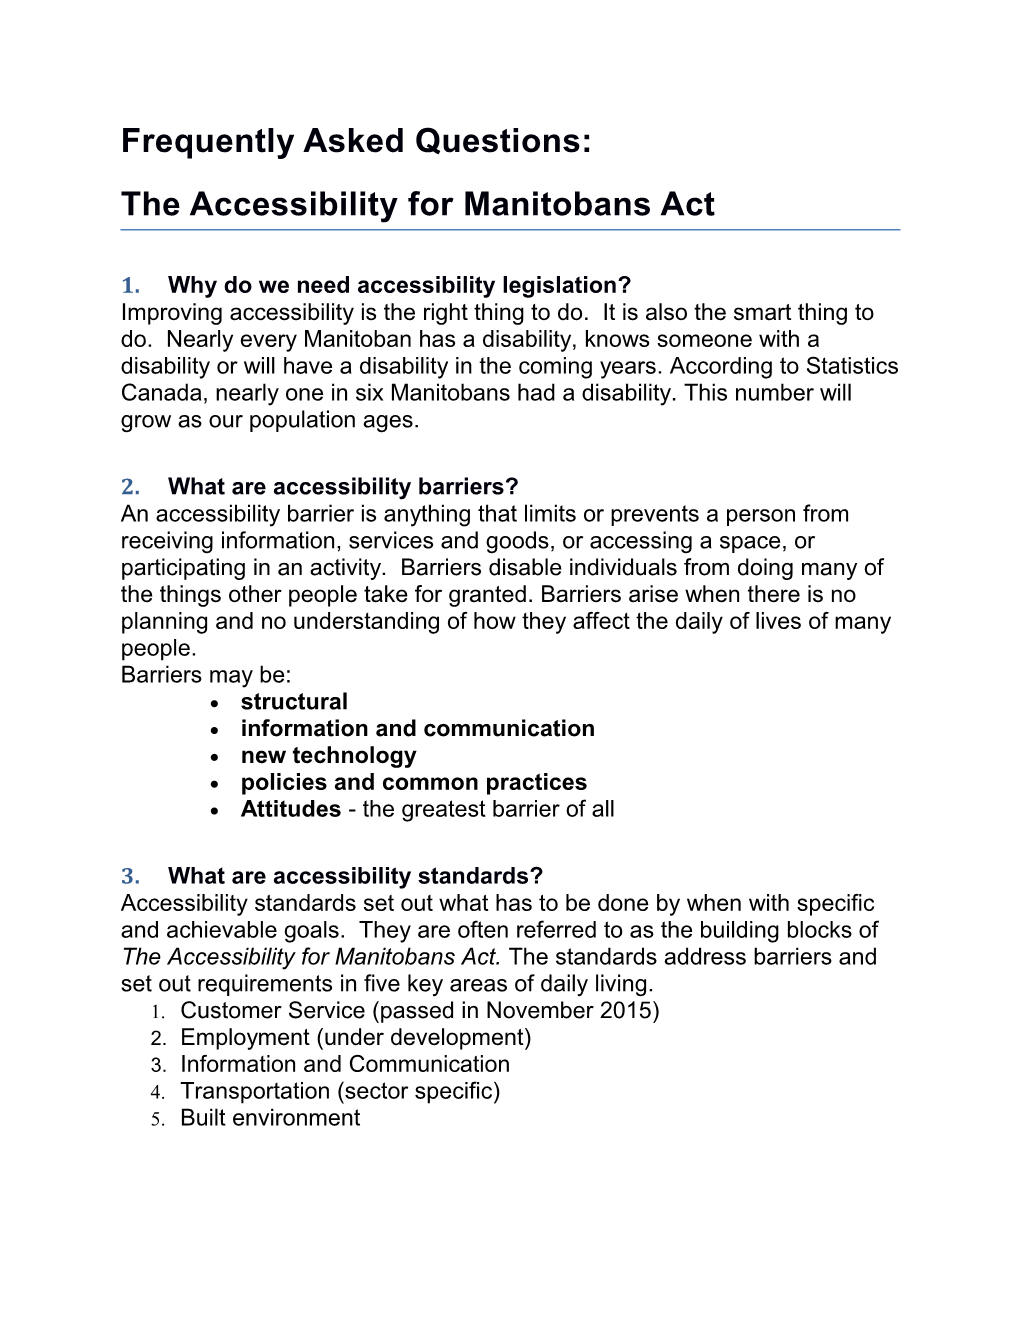 1.Why Do We Need Accessibility Legislation?